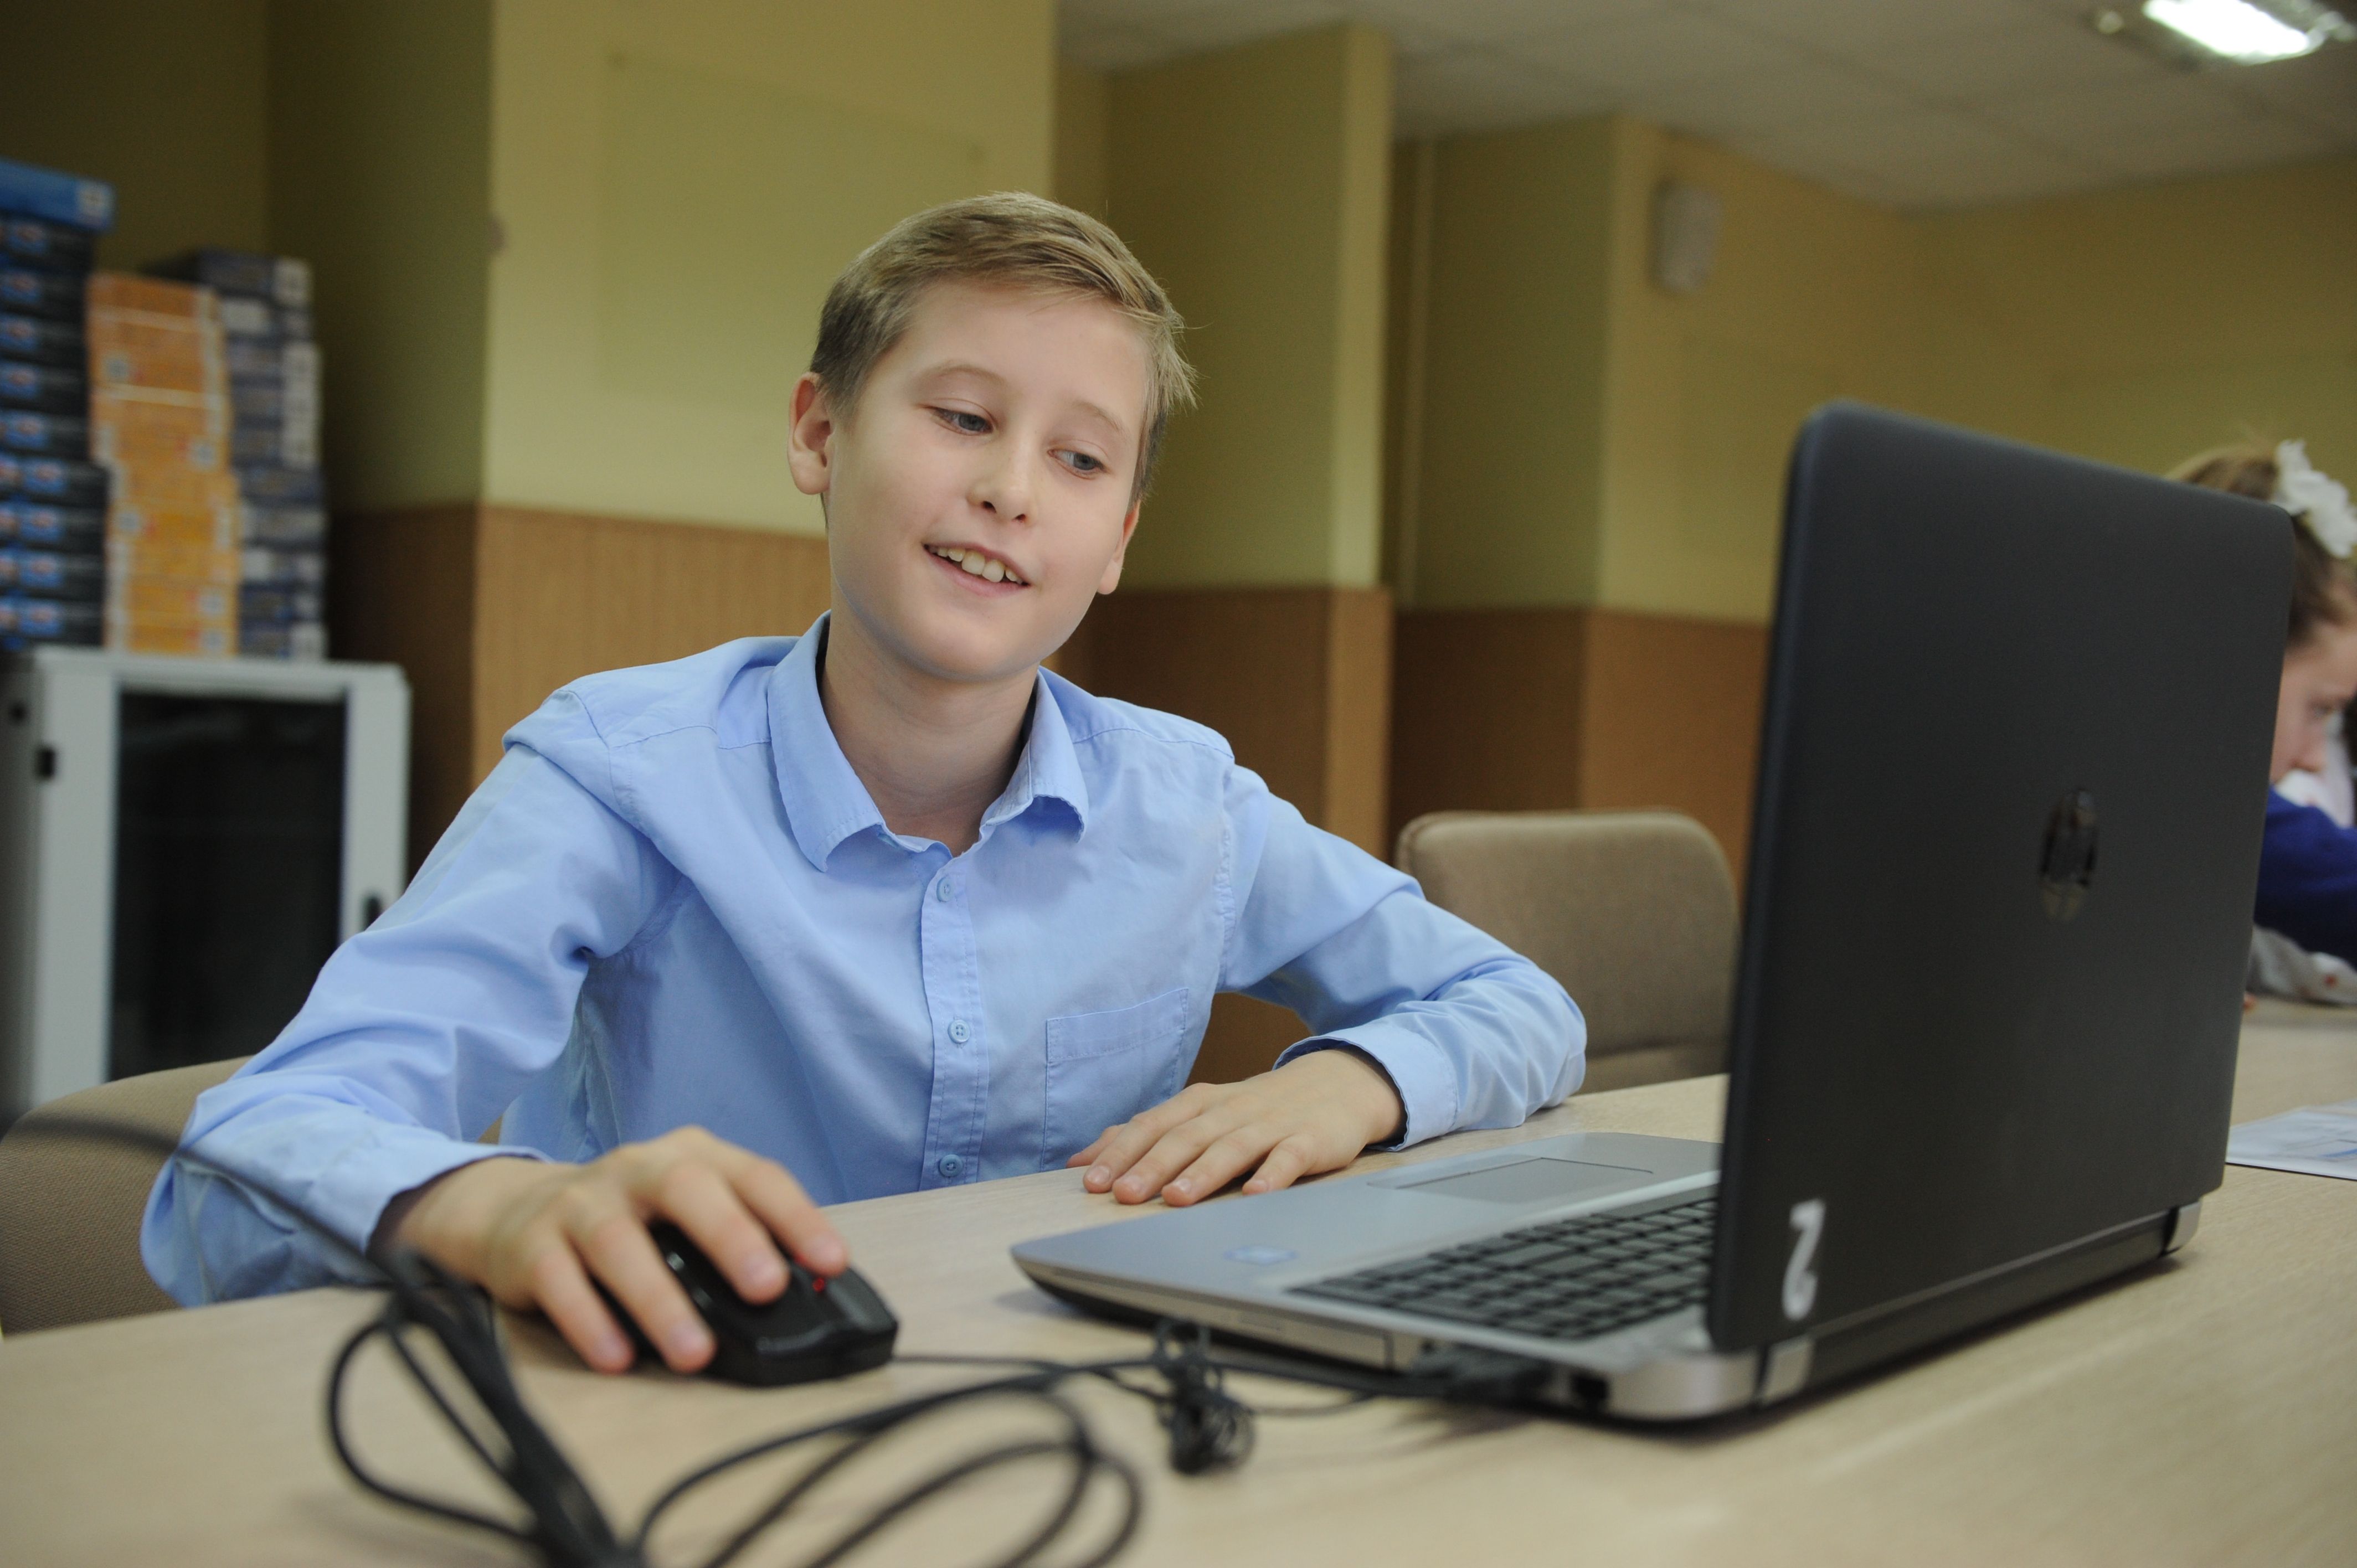 WorldSkills подготовил для московских школьников онлайн-программу